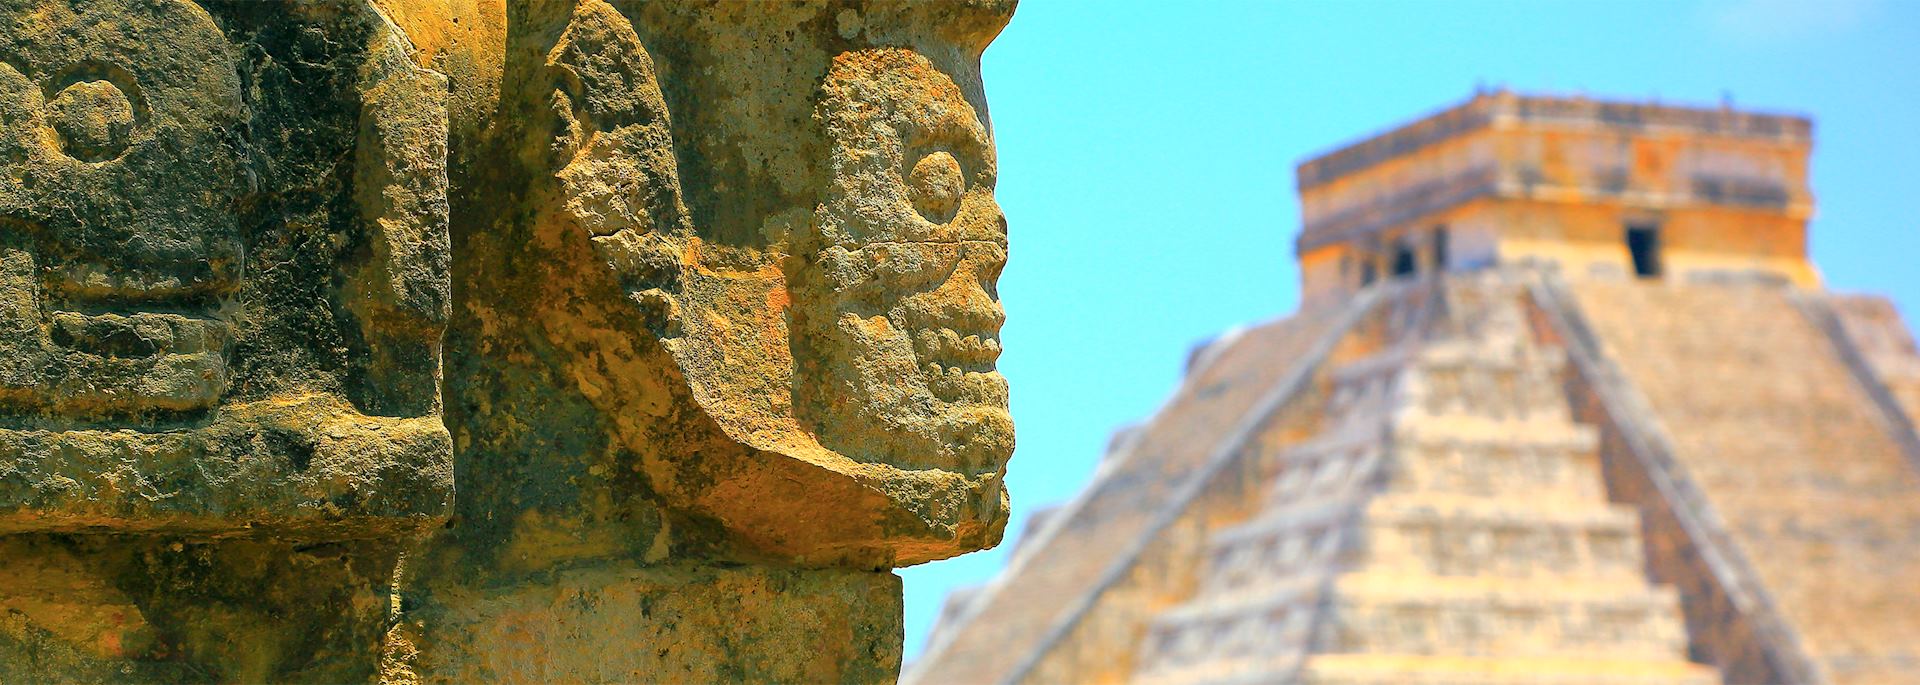 Kukulkan Pyramid at Chichén Itzá